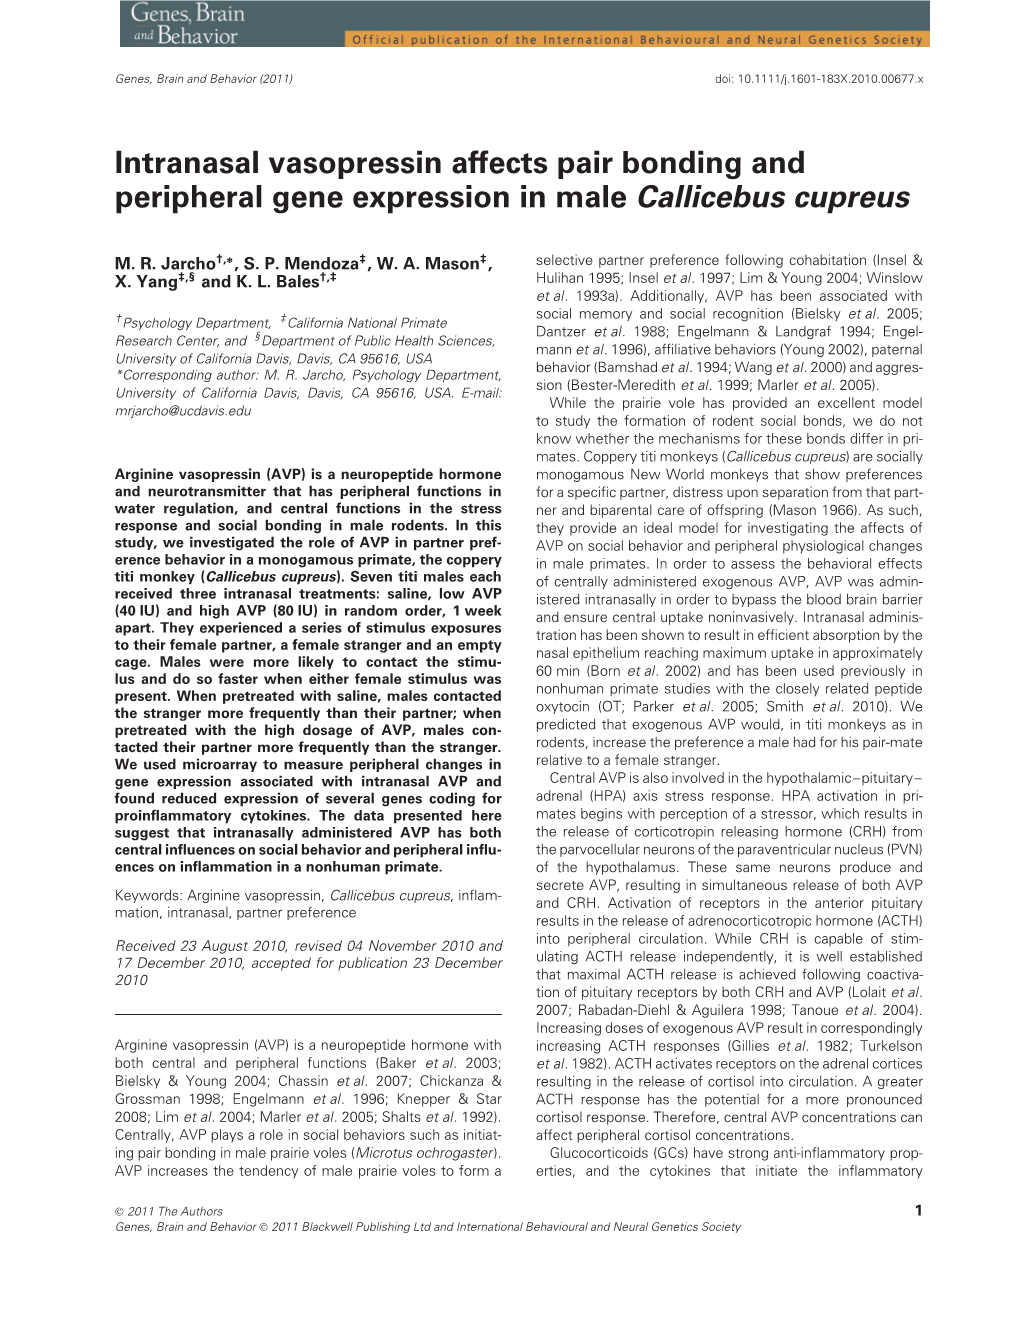 Intranasal Vasopressin Affects Pair Bonding and Peripheral Gene Expression in Male Callicebus Cupreus